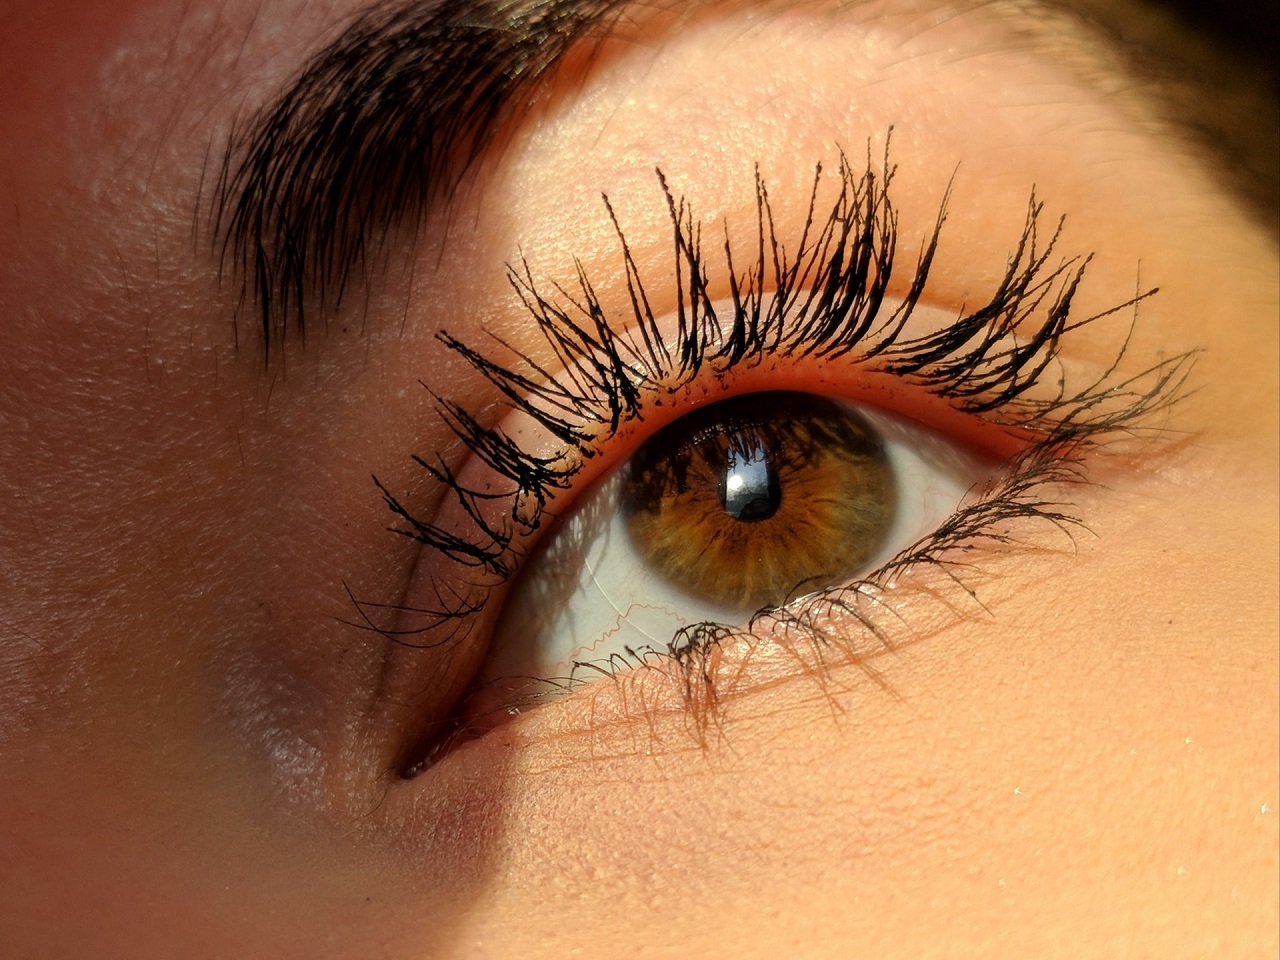 Eyelash and eyebrow styling – what does it involve?